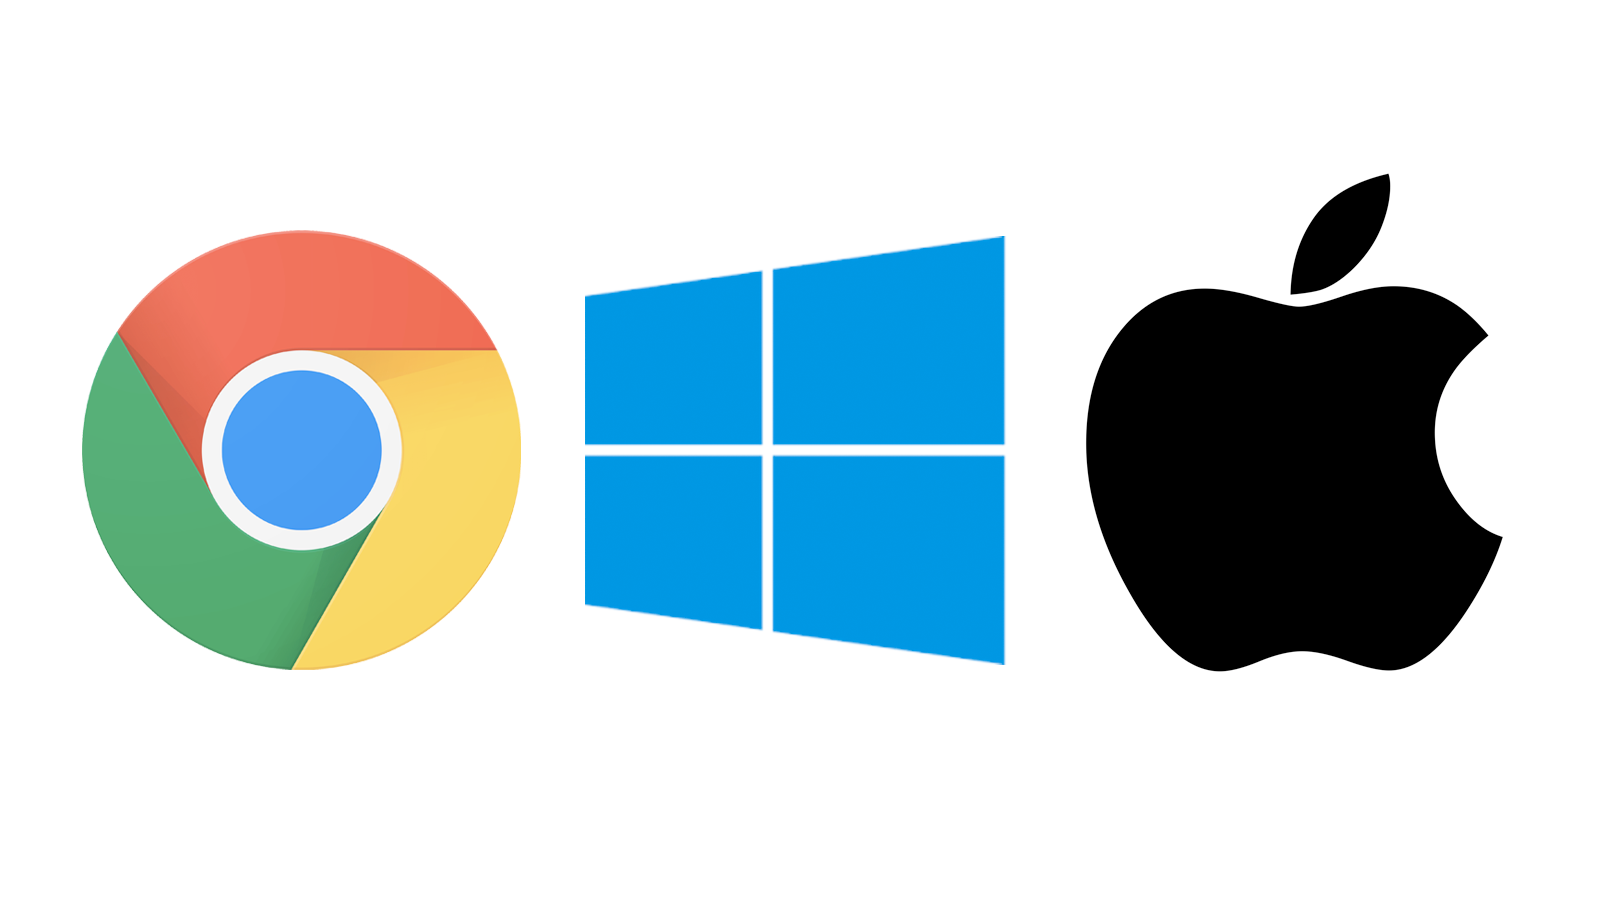 Google, Microsoft, and Apple logos.